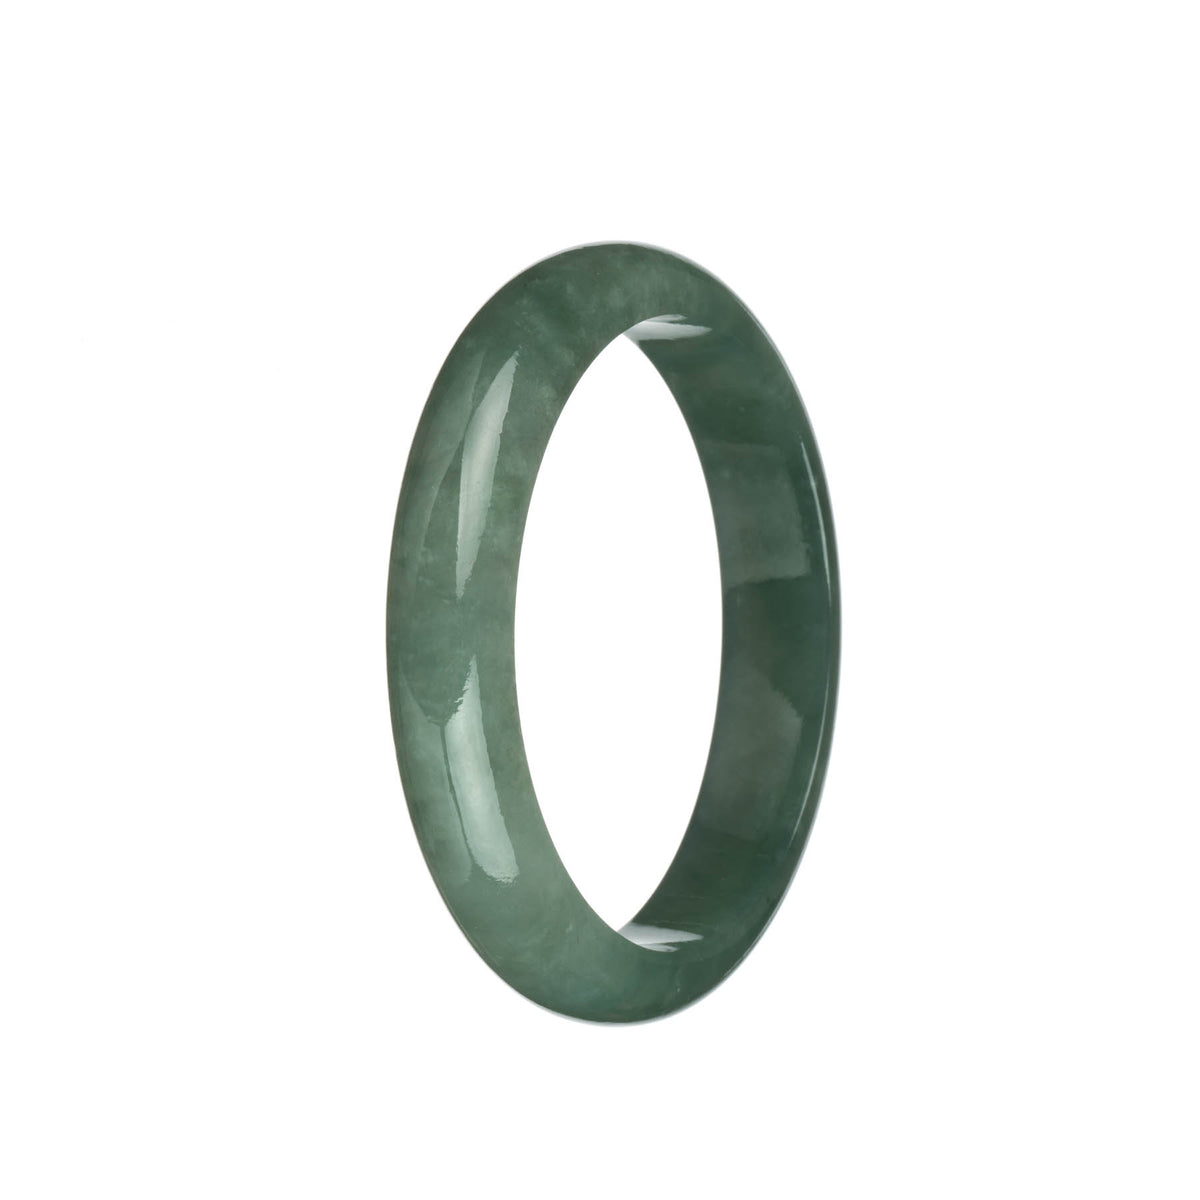 Certified Grade A Green Jadeite Bracelet - 61mm Half Moon